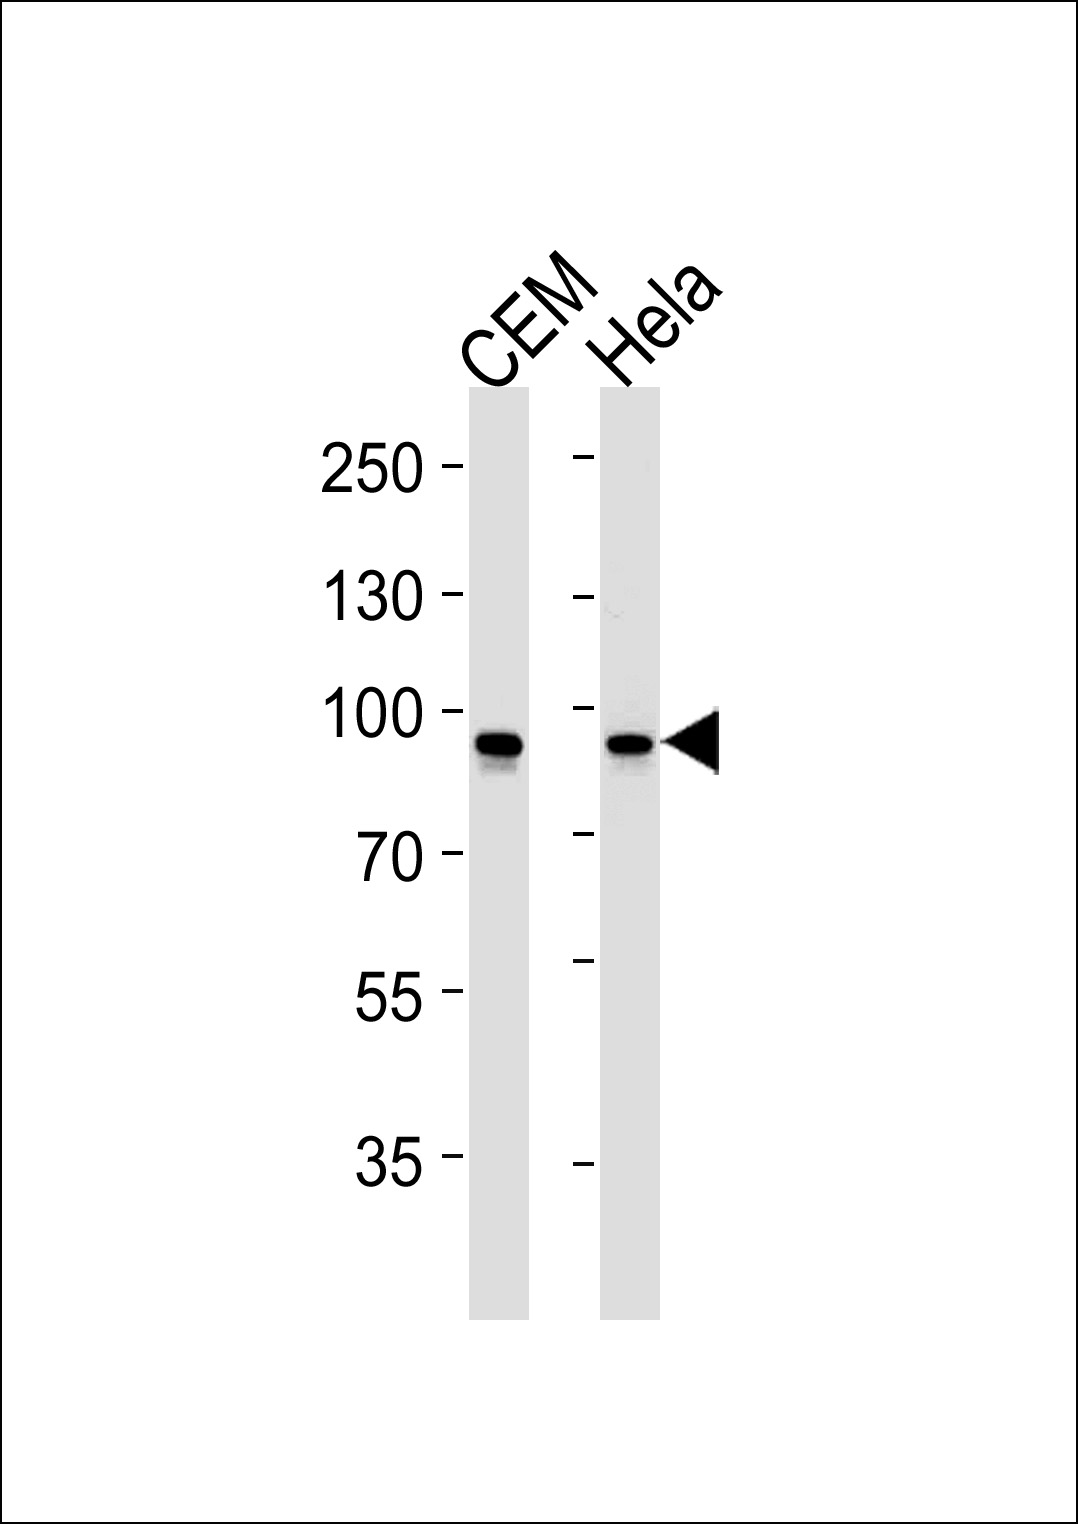 STAT1 Antibody(Cat. #AM2229b) western blot analysis in CEM,Hela cell line lysates (35?g/lane).This demonstrates the STAT1 antibody detected the STAT1 protein (arrow).